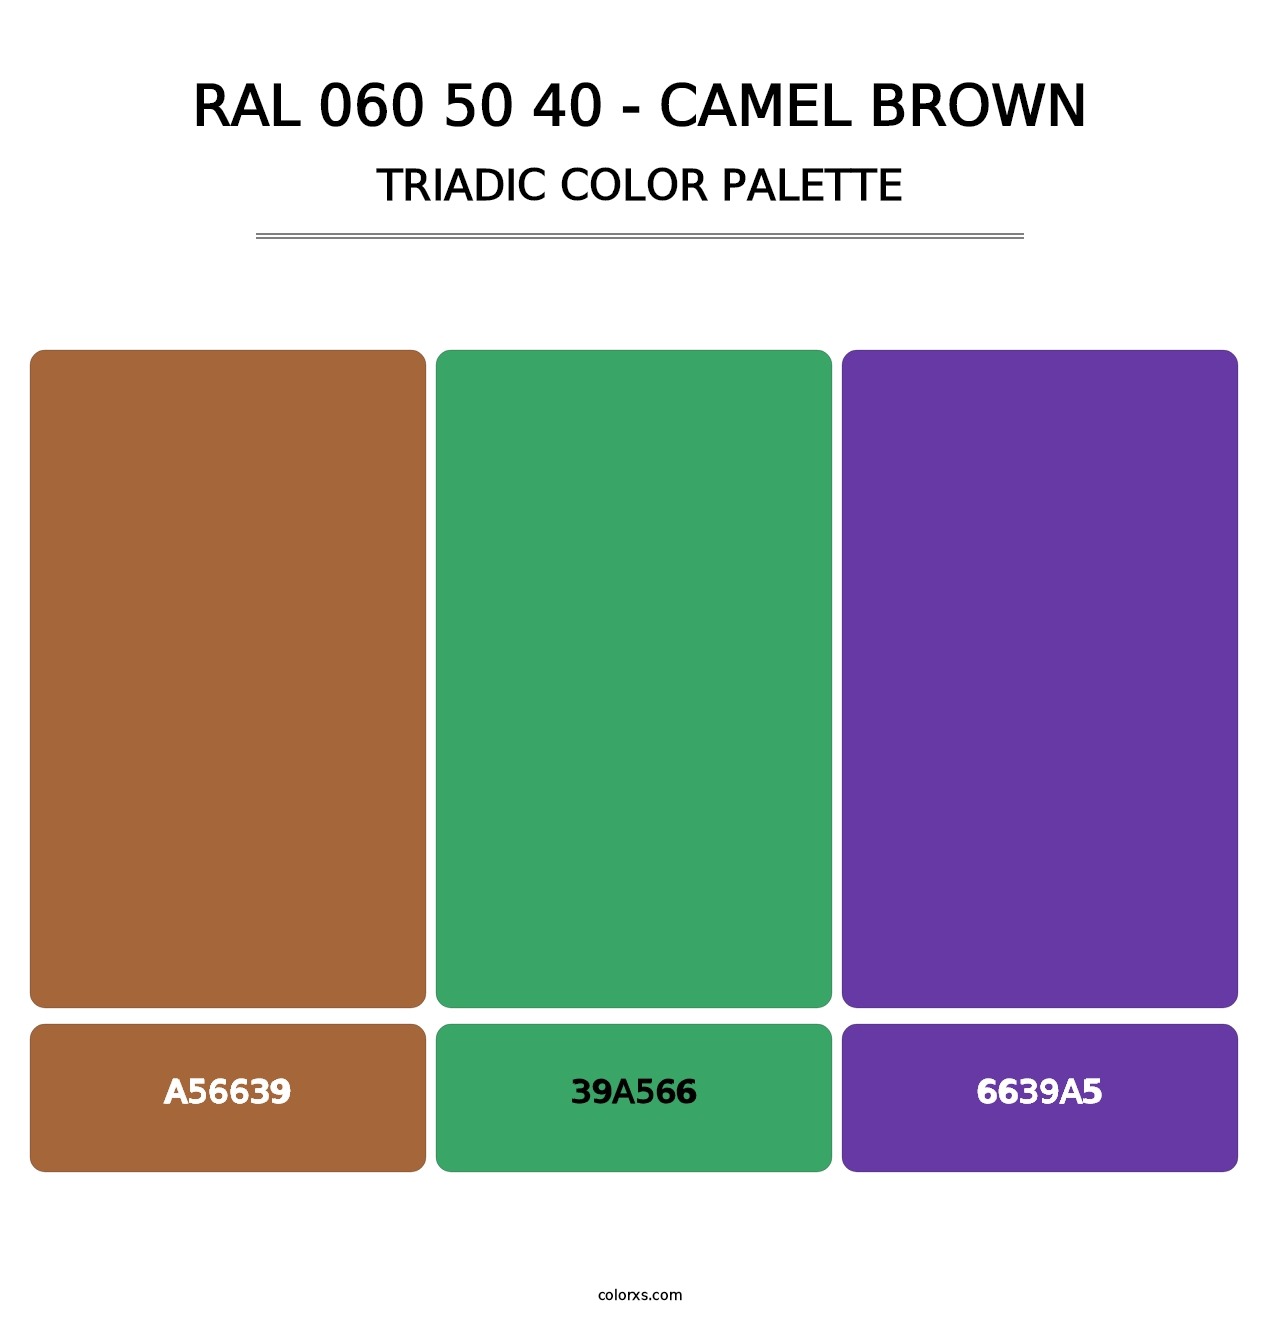 RAL 060 50 40 - Camel Brown - Triadic Color Palette